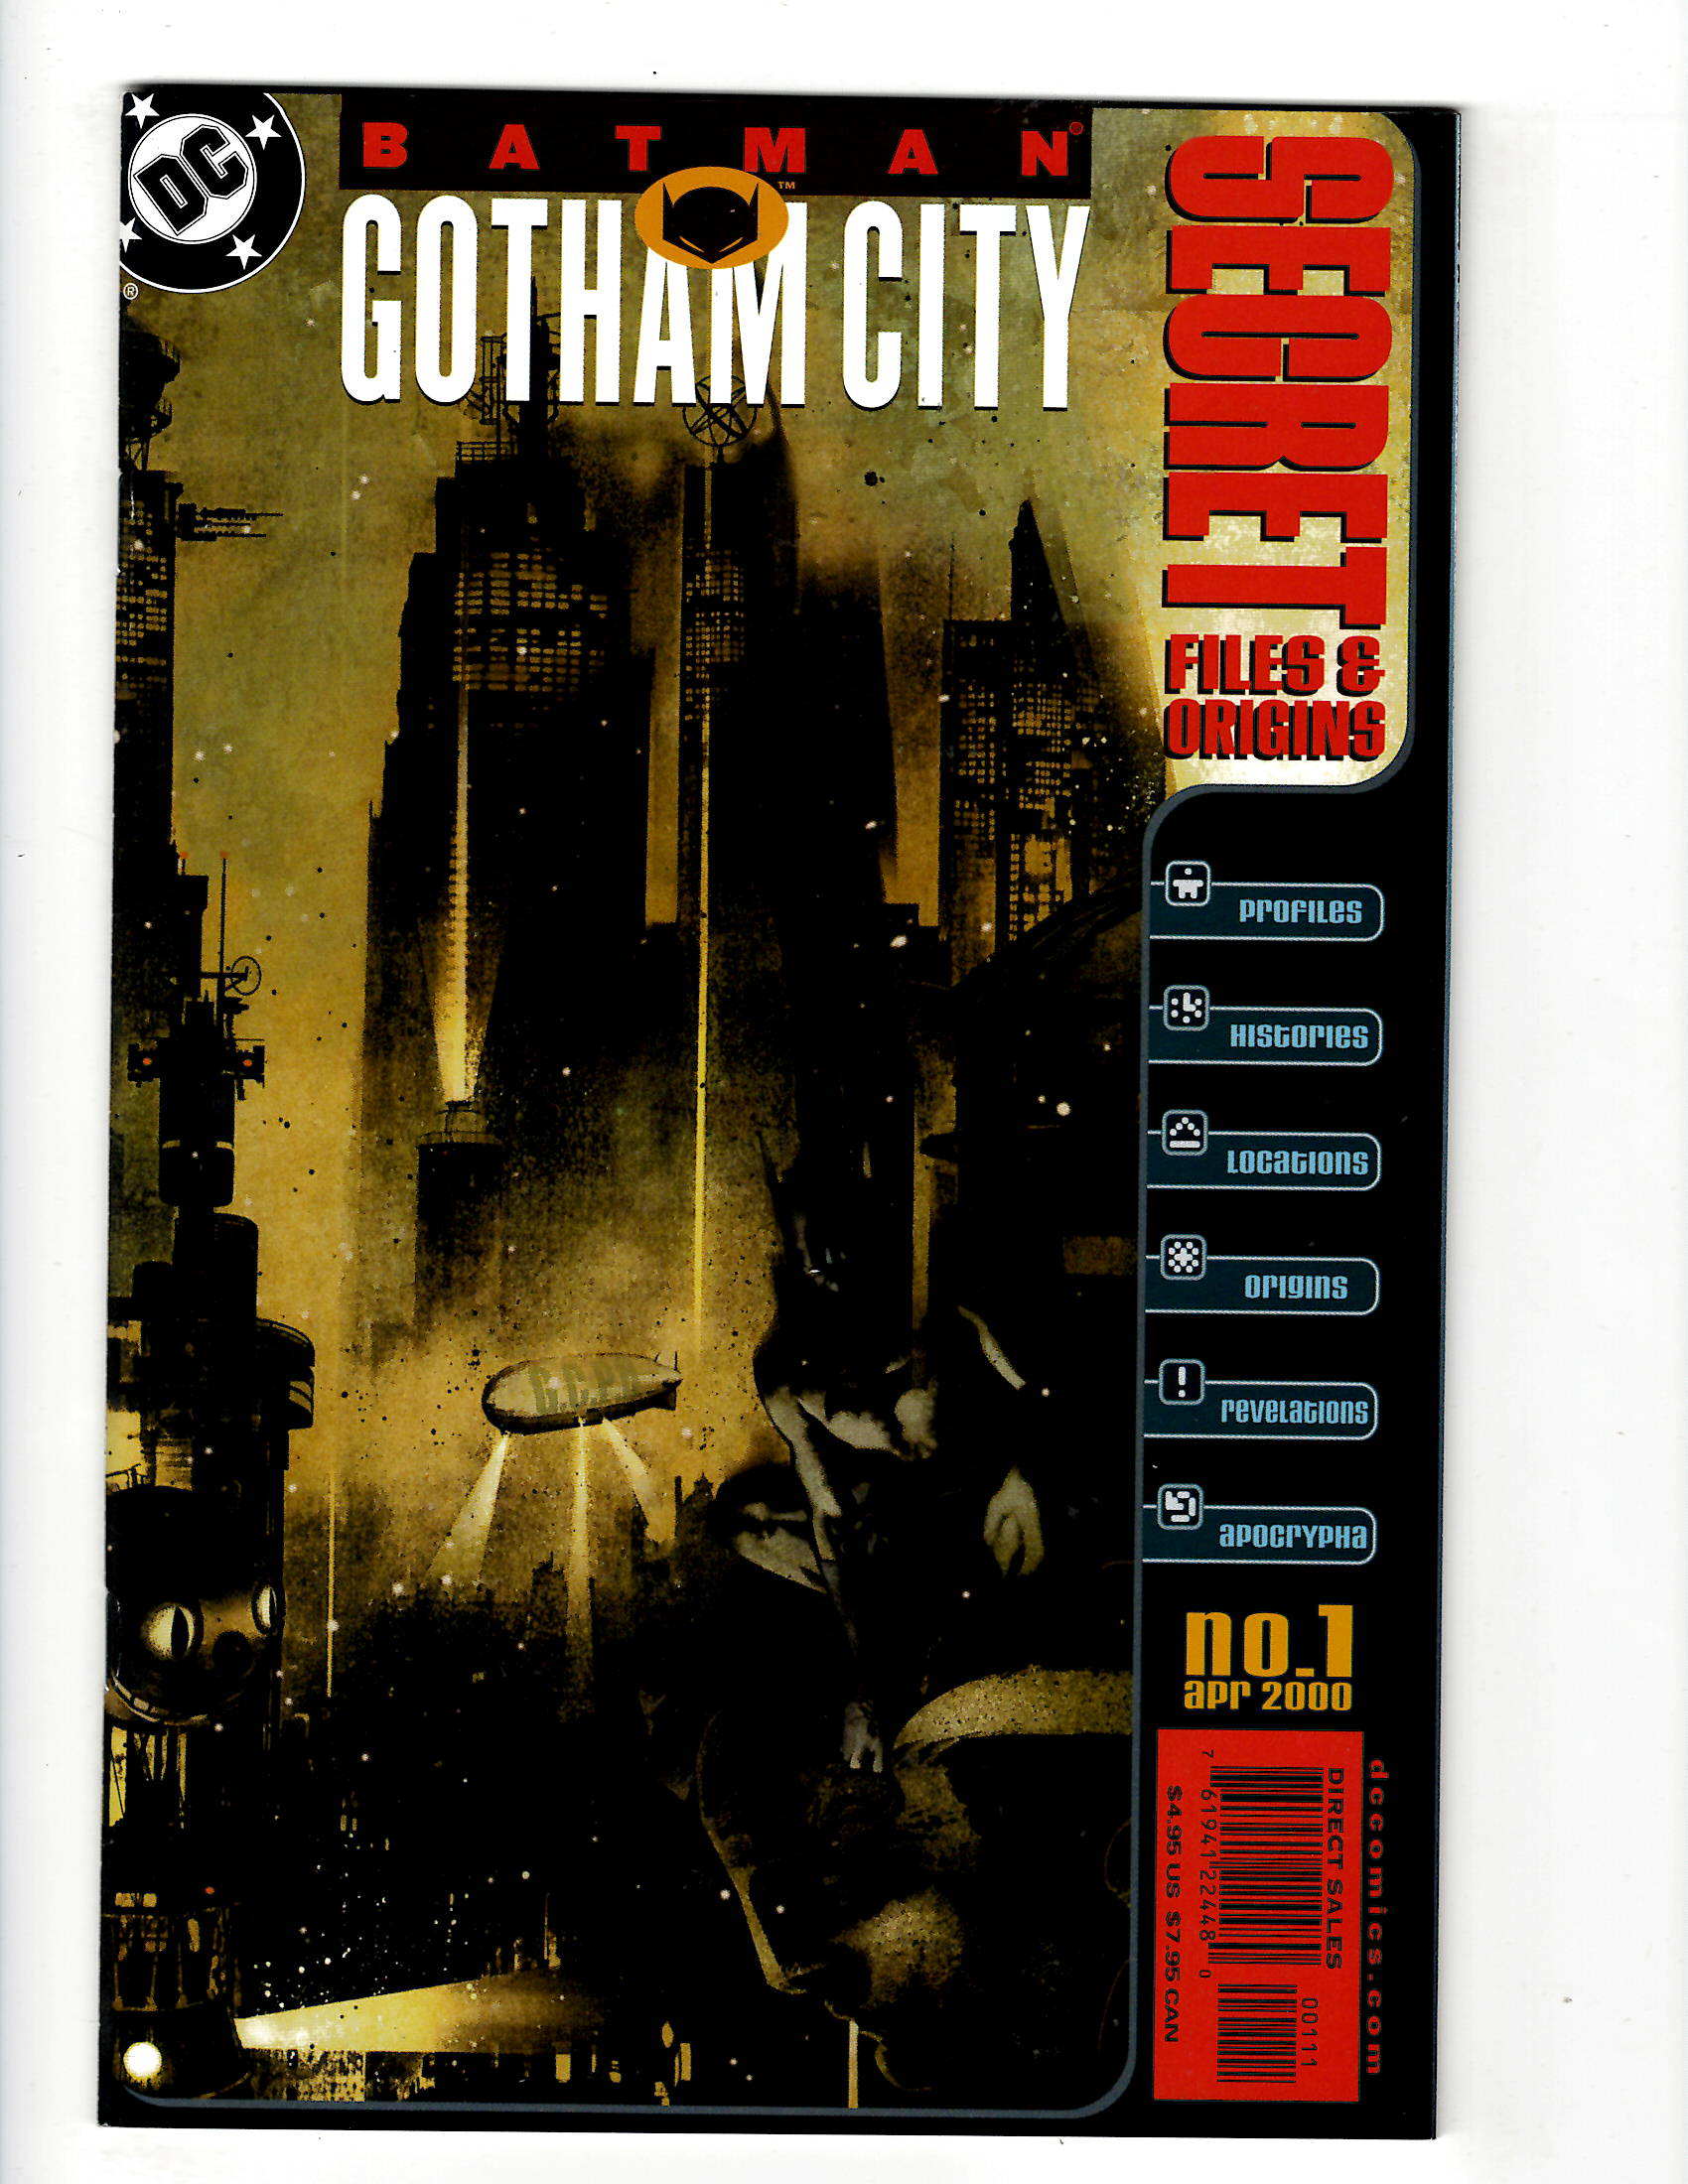 wholesale-commodity-gotham-city-batman-secret-files-and-origins-vol-1-1-2000-browse-from-huge